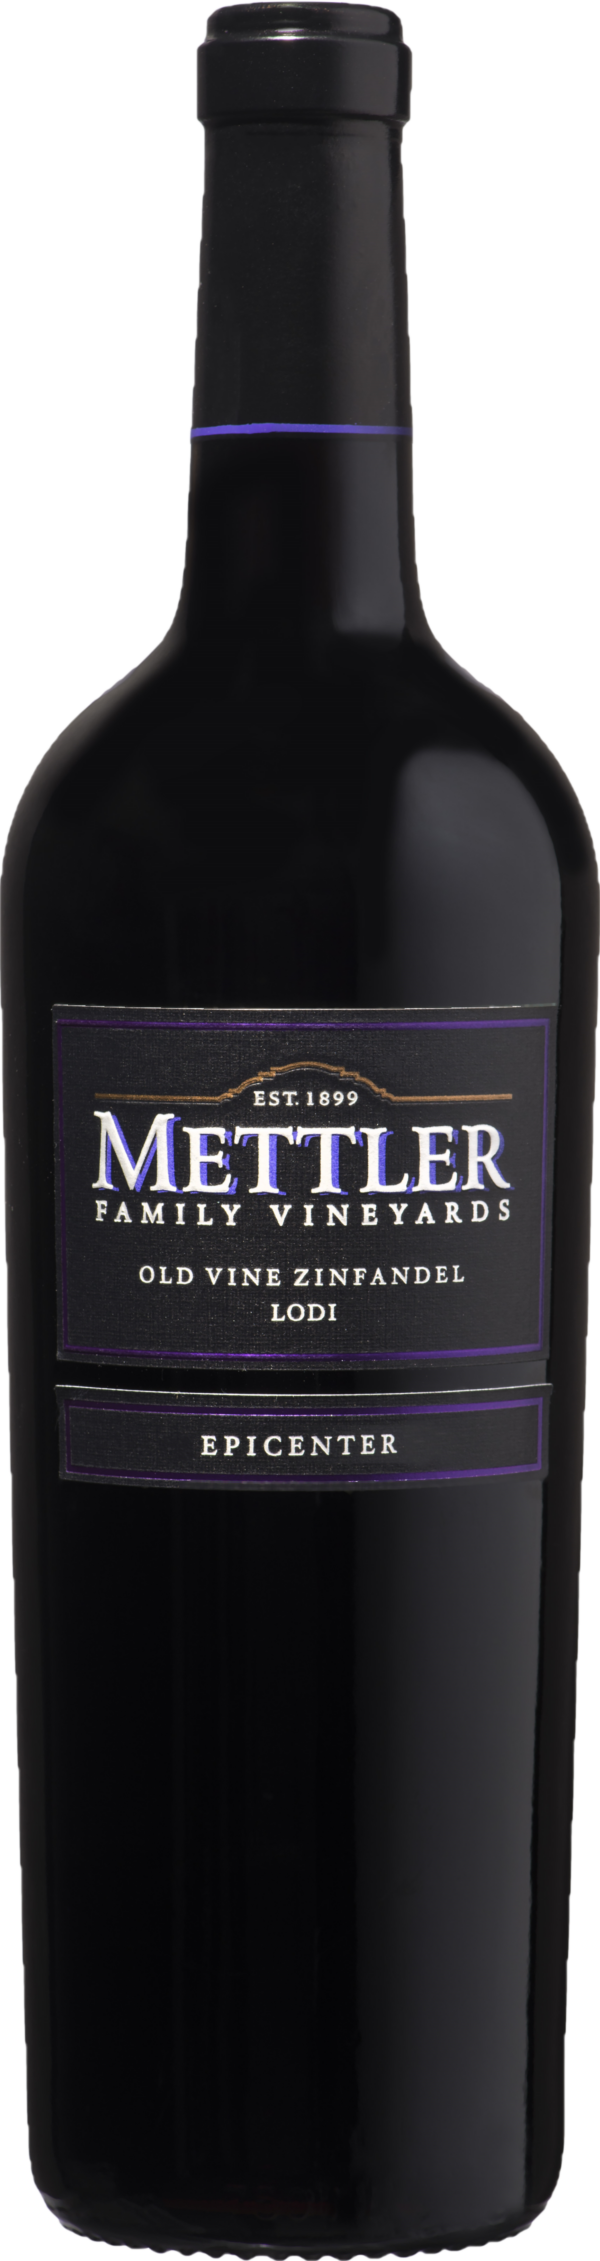 Product image of Mettler Old Vine Zinfandel 2020 from 8wines